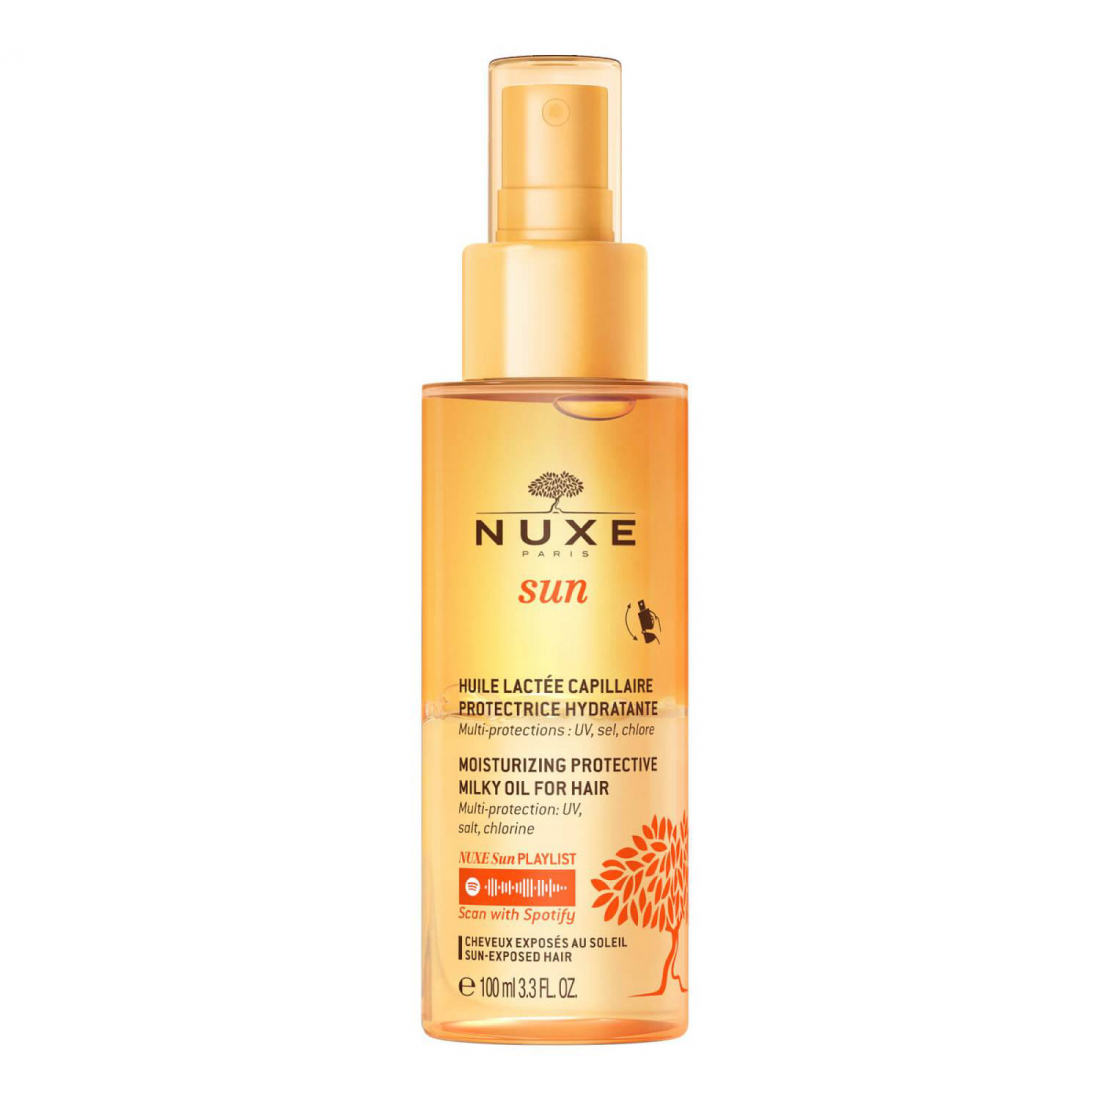 'Sun Protectrice Hydratante' Hair Oil - 100 ml